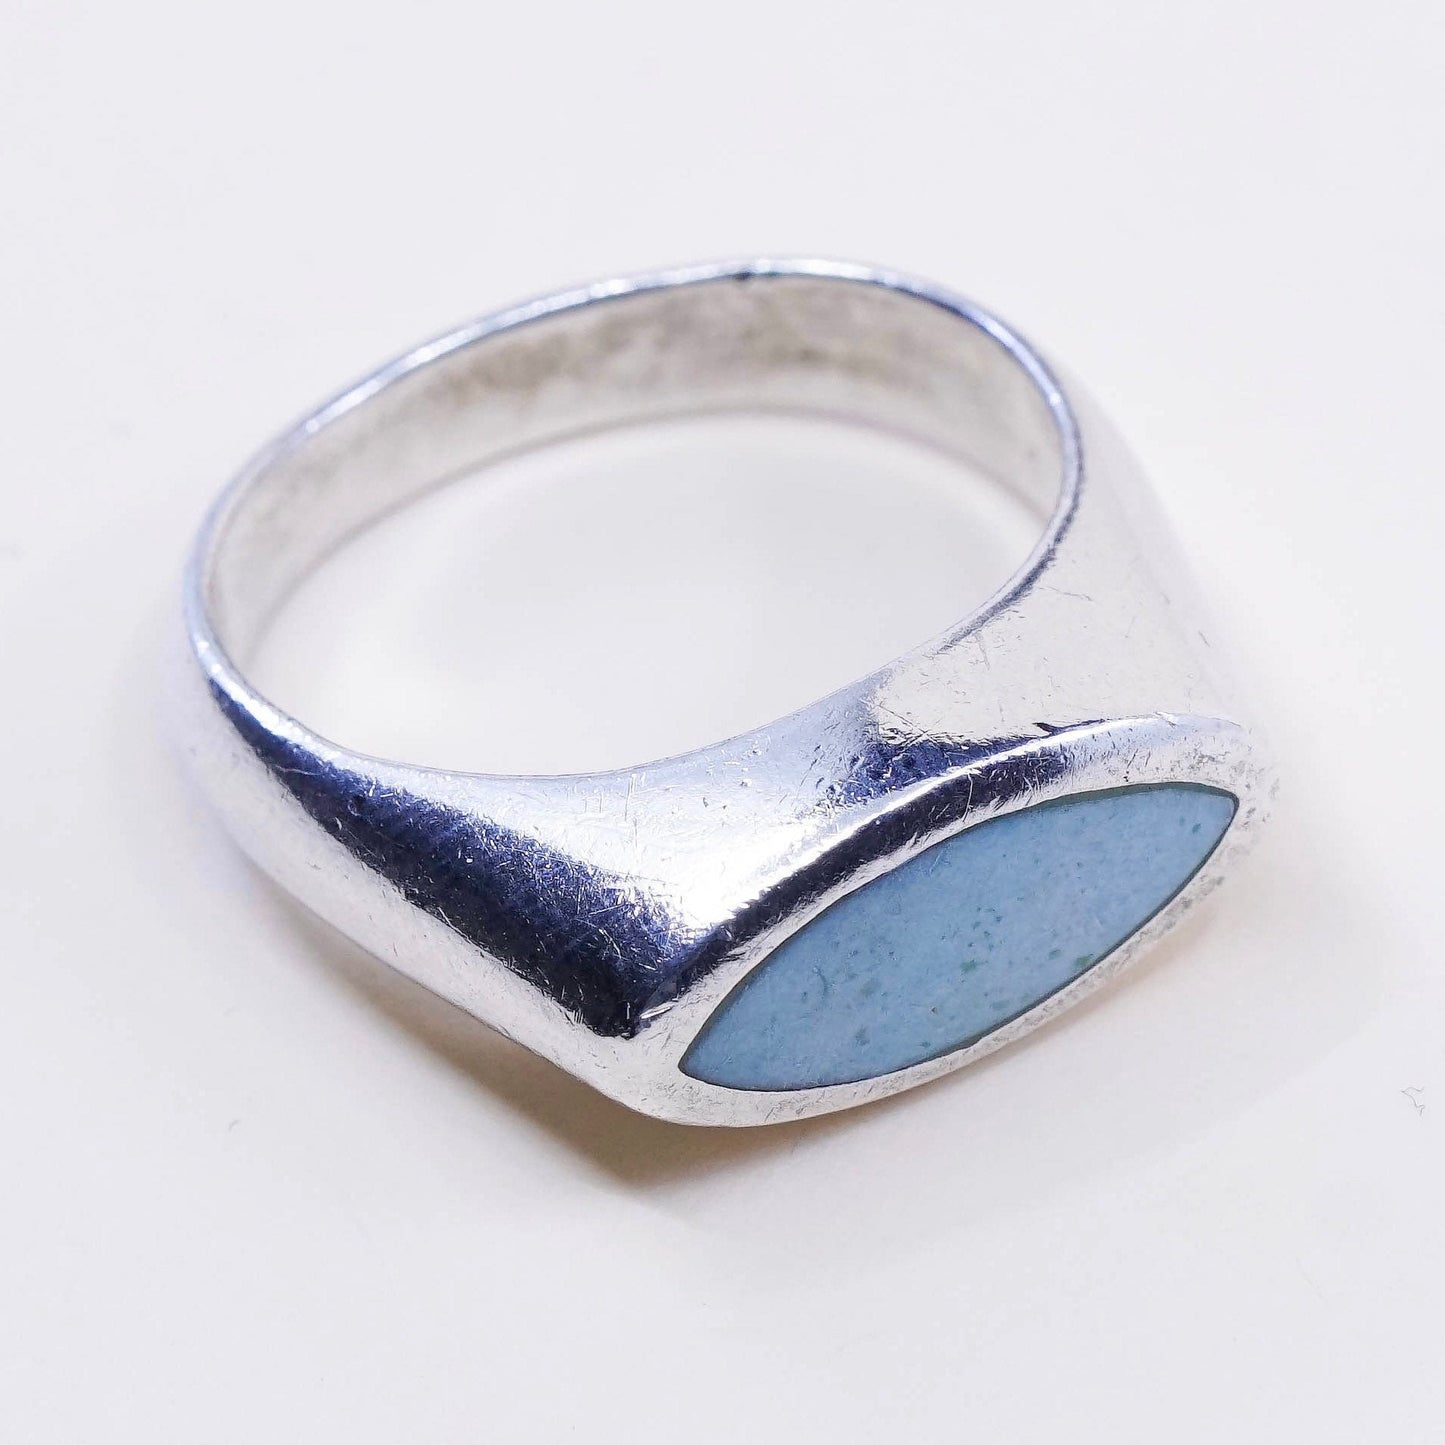 sz 9.25, vtg Sterling silver handmade ring, modern 925 band w/ turquoise